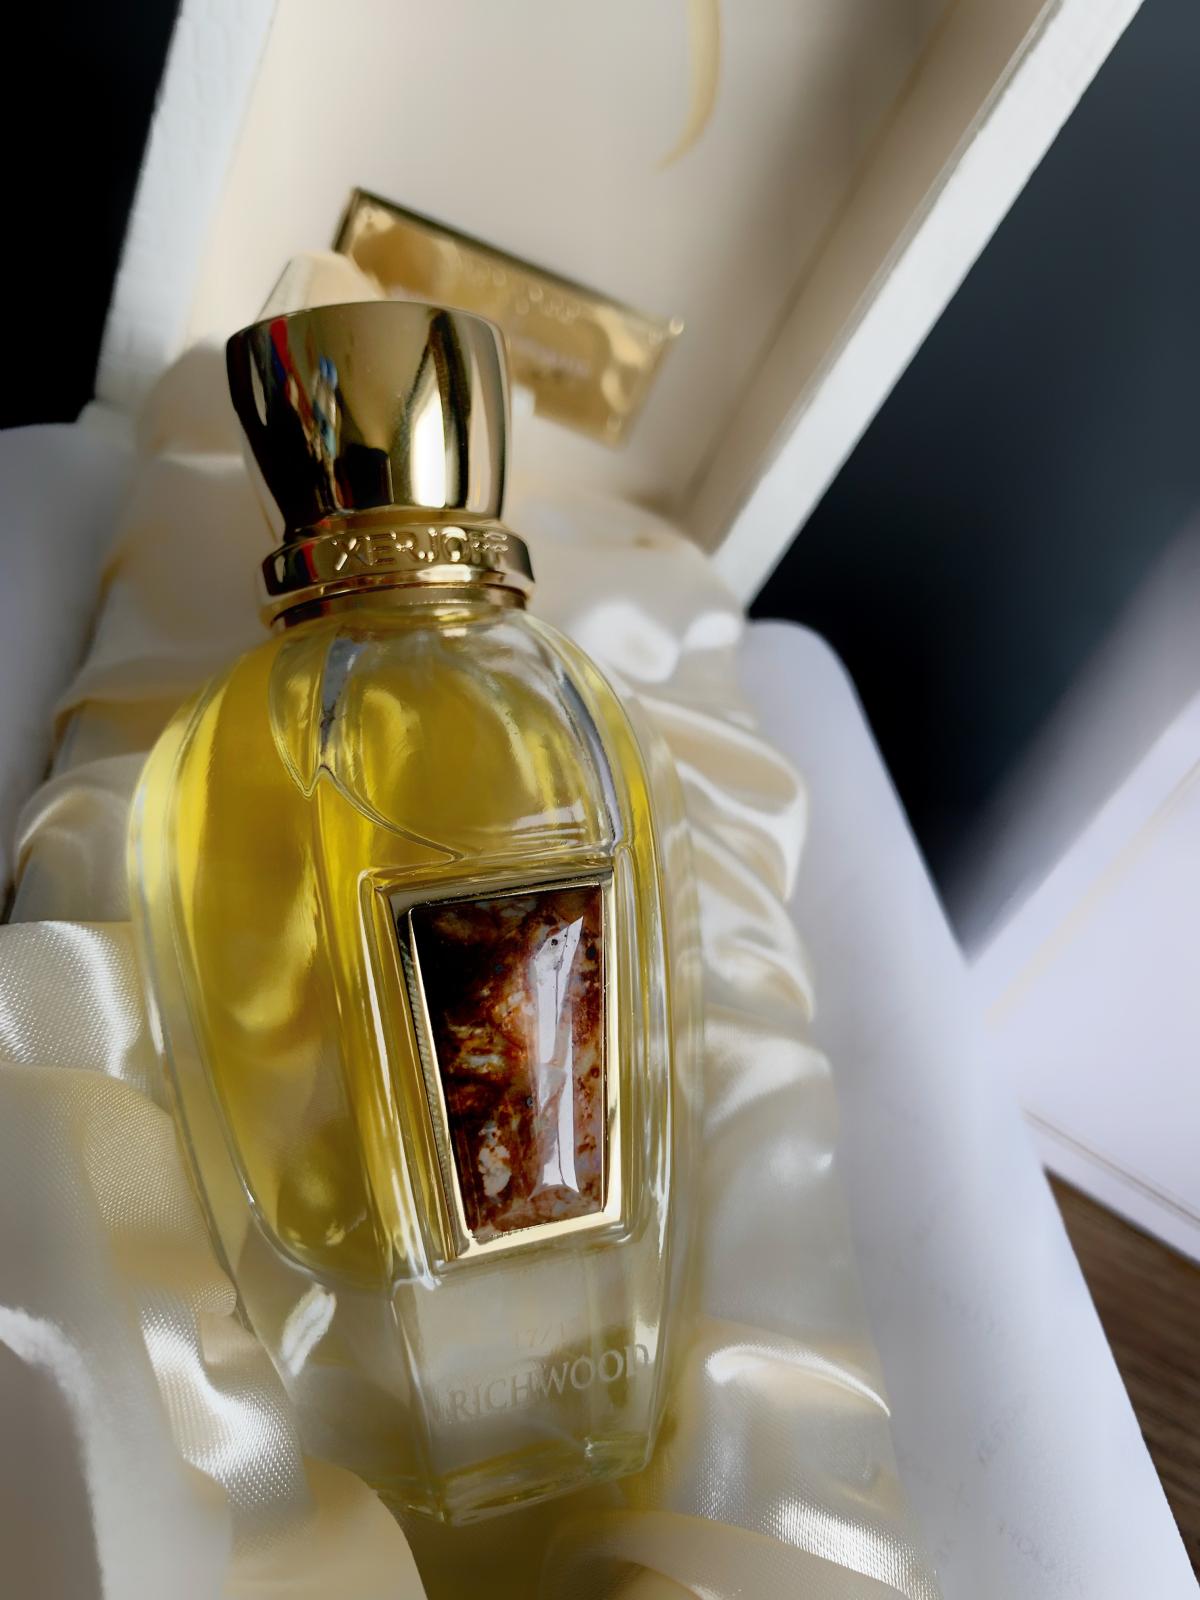 Richwood Xerjoff perfume - a fragrance for women and men 2010